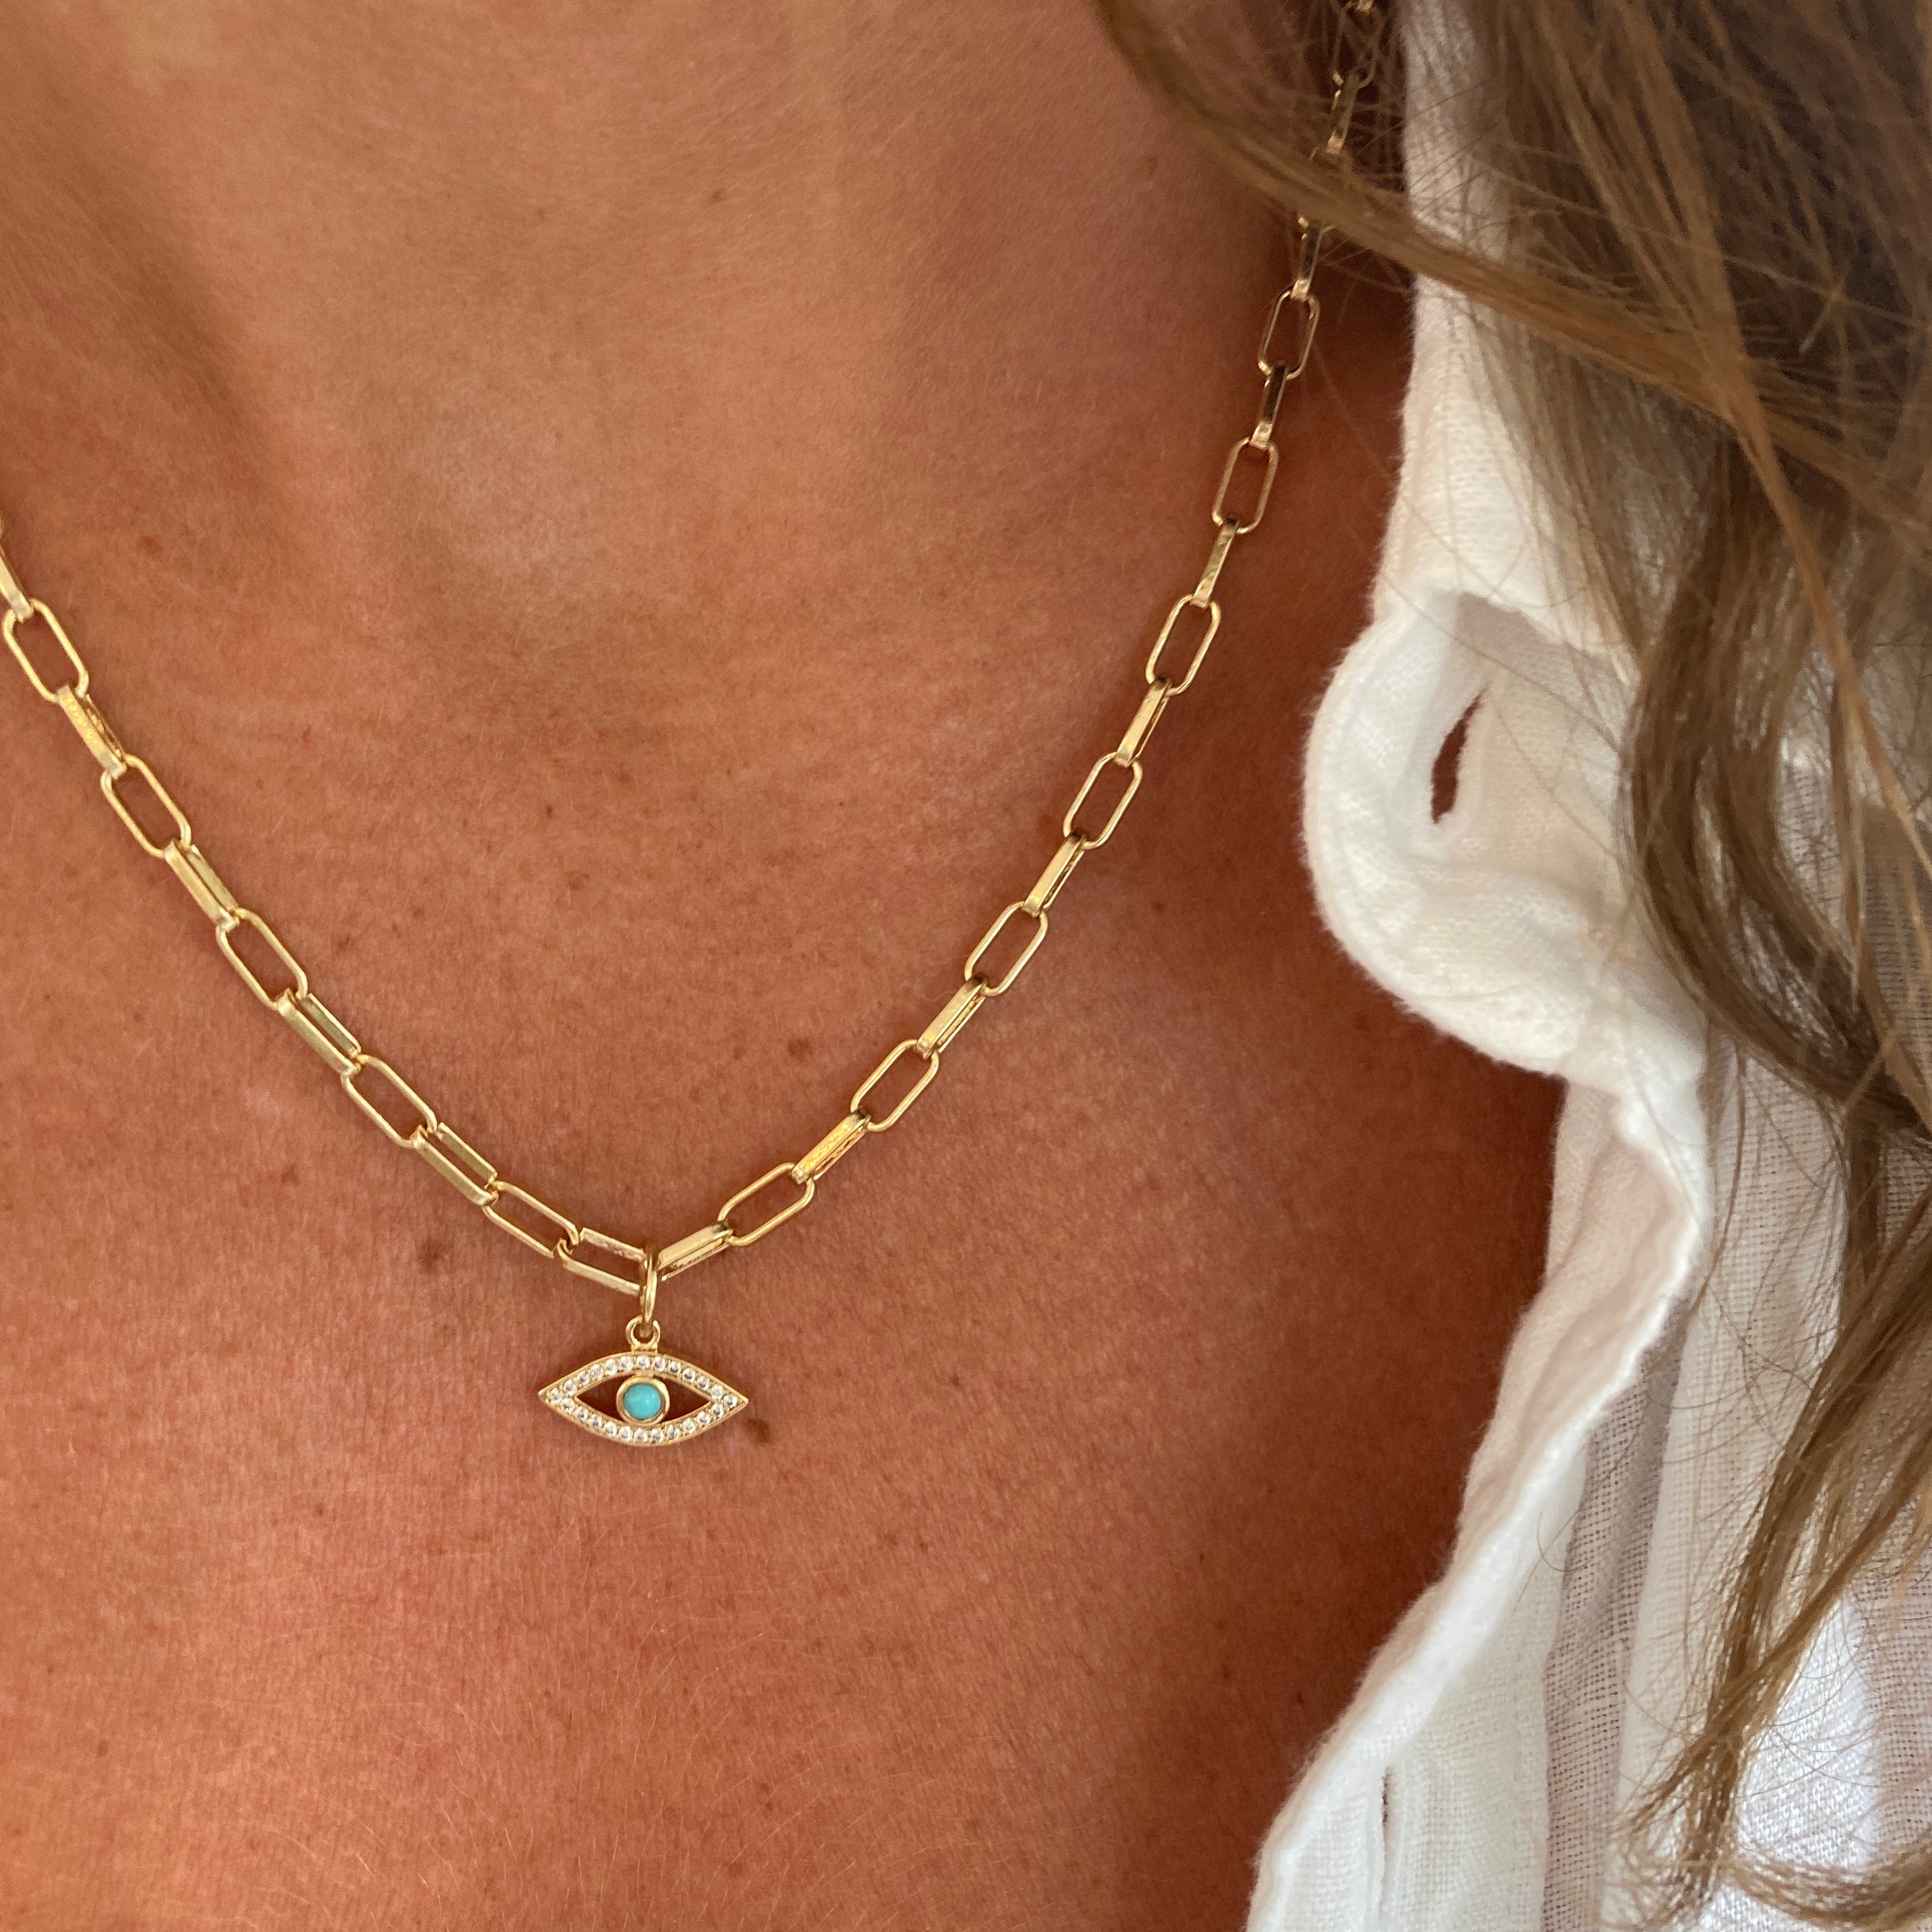 Evil Eye Sapphire and Diamond Medallion Necklace – San Antonio Jewelry